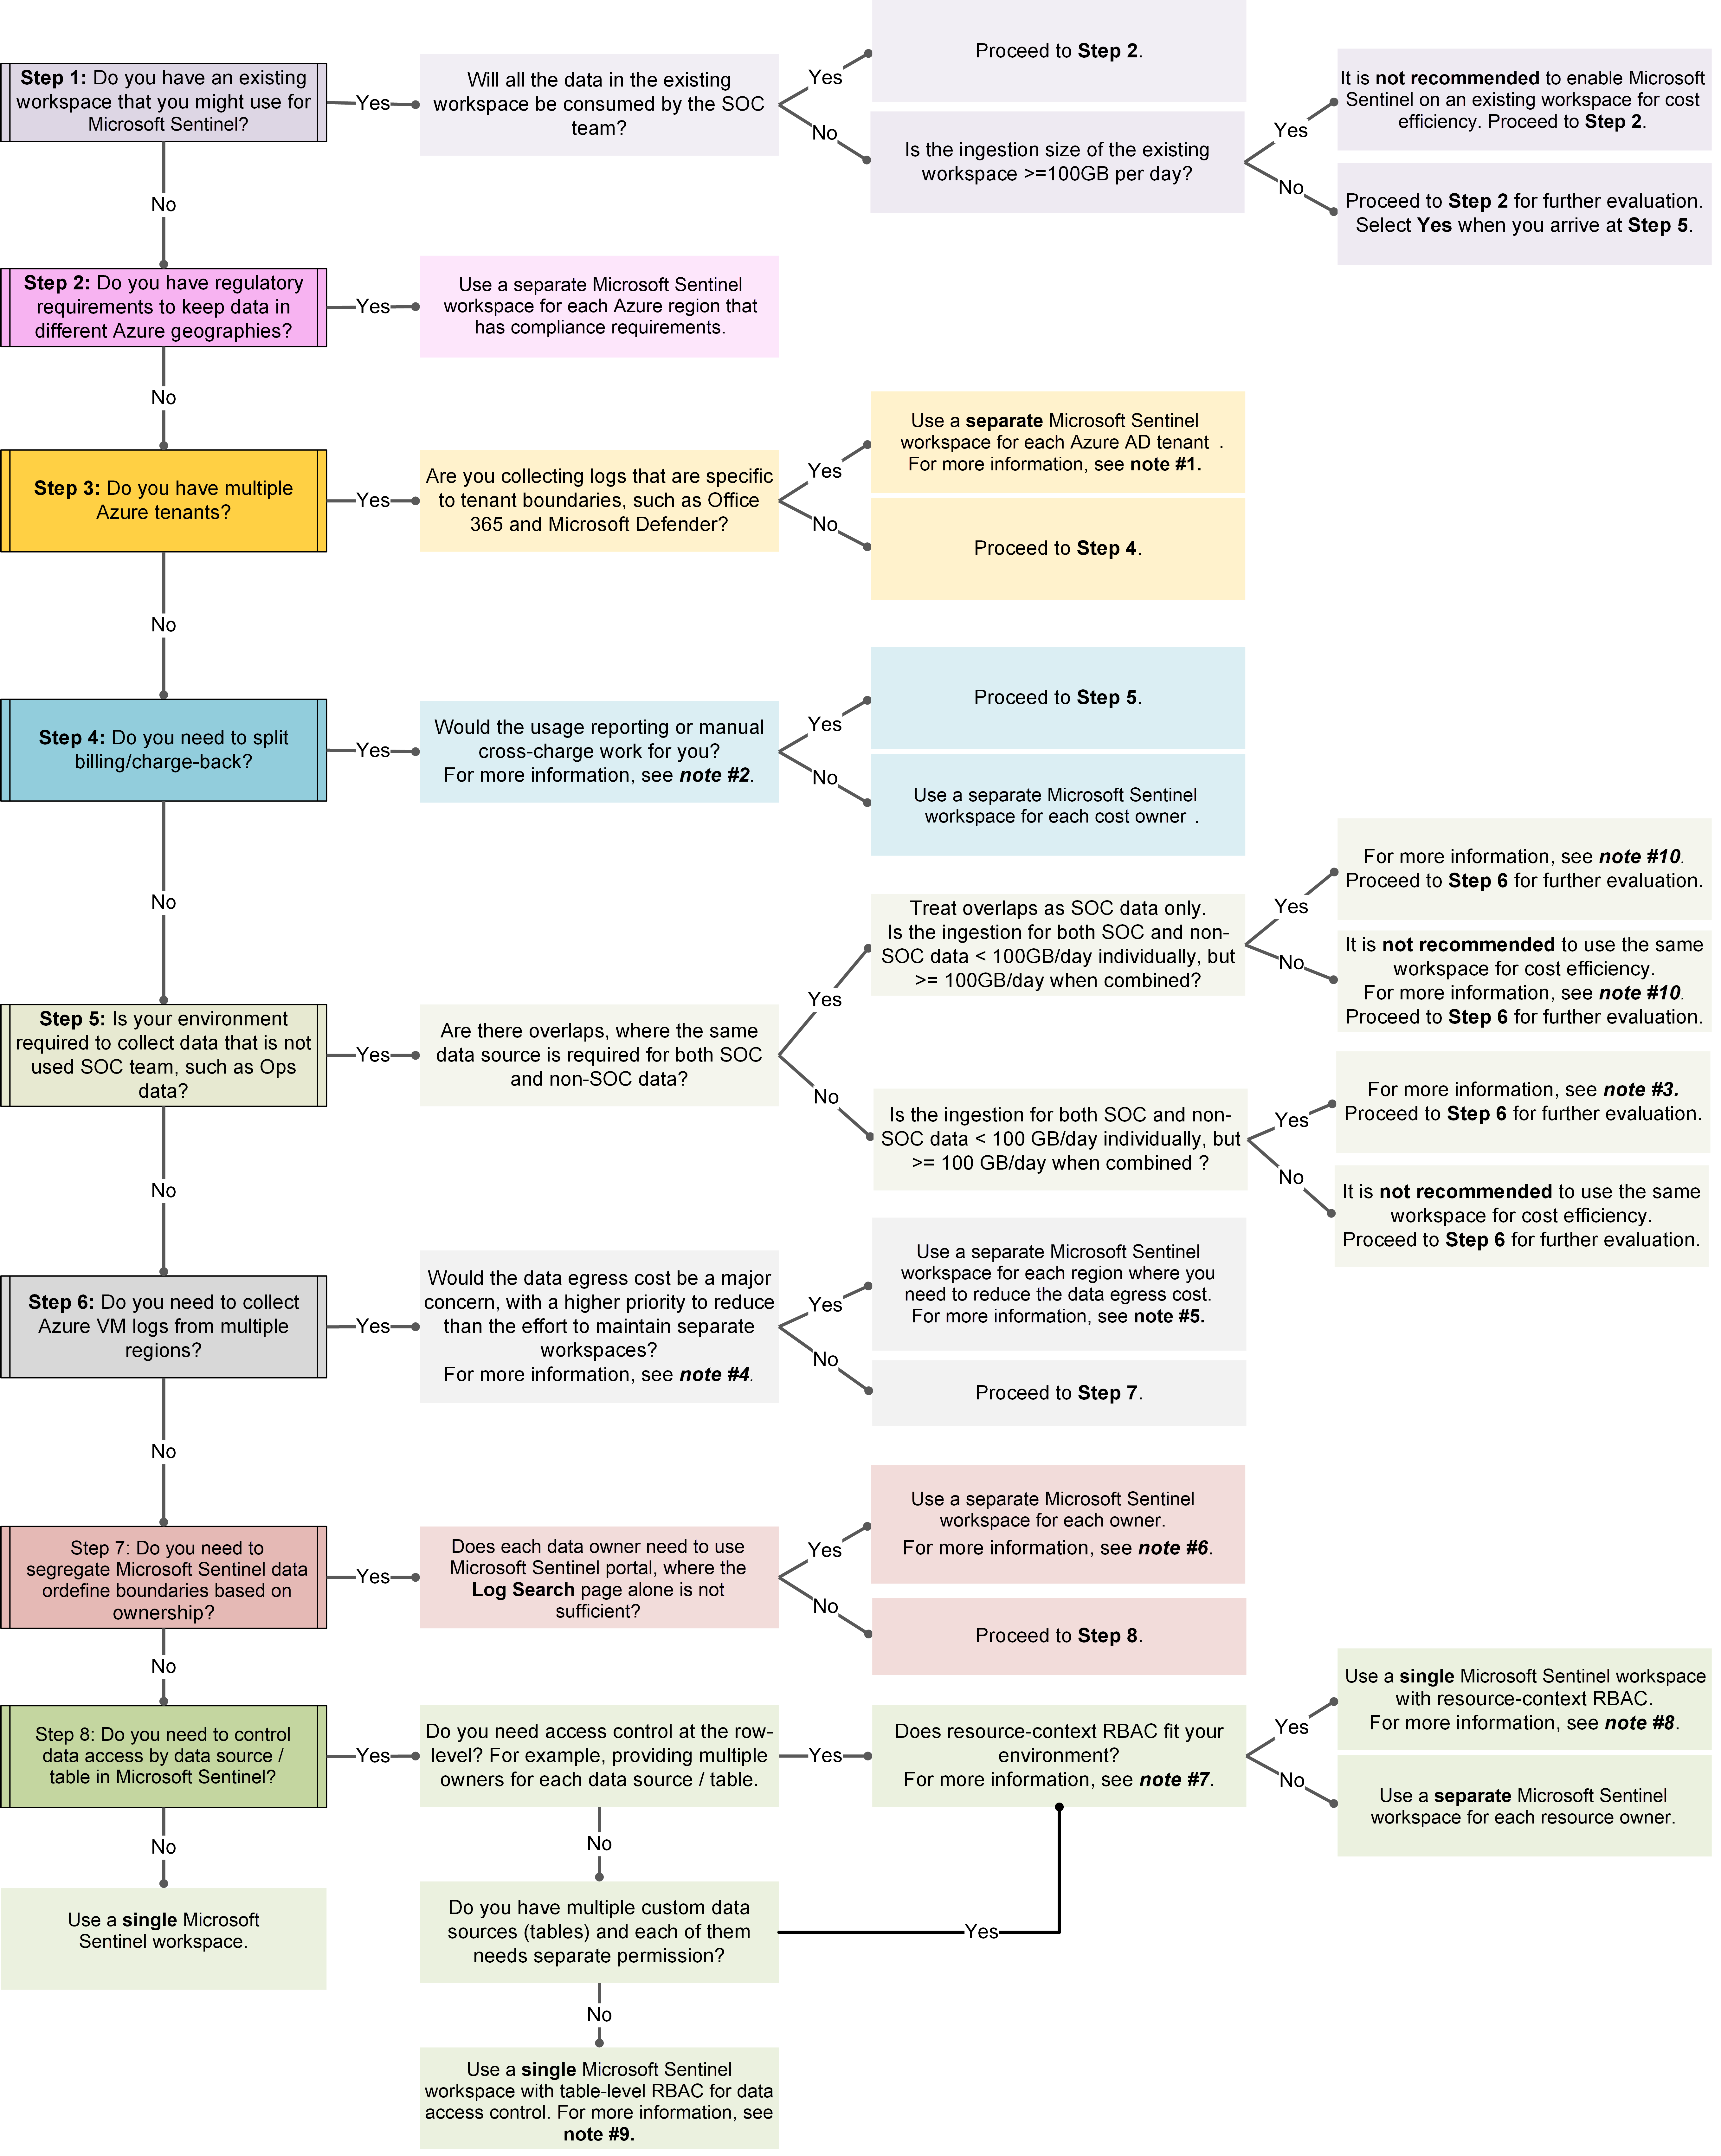 Microsoft Sentinel workspace design decision tree.